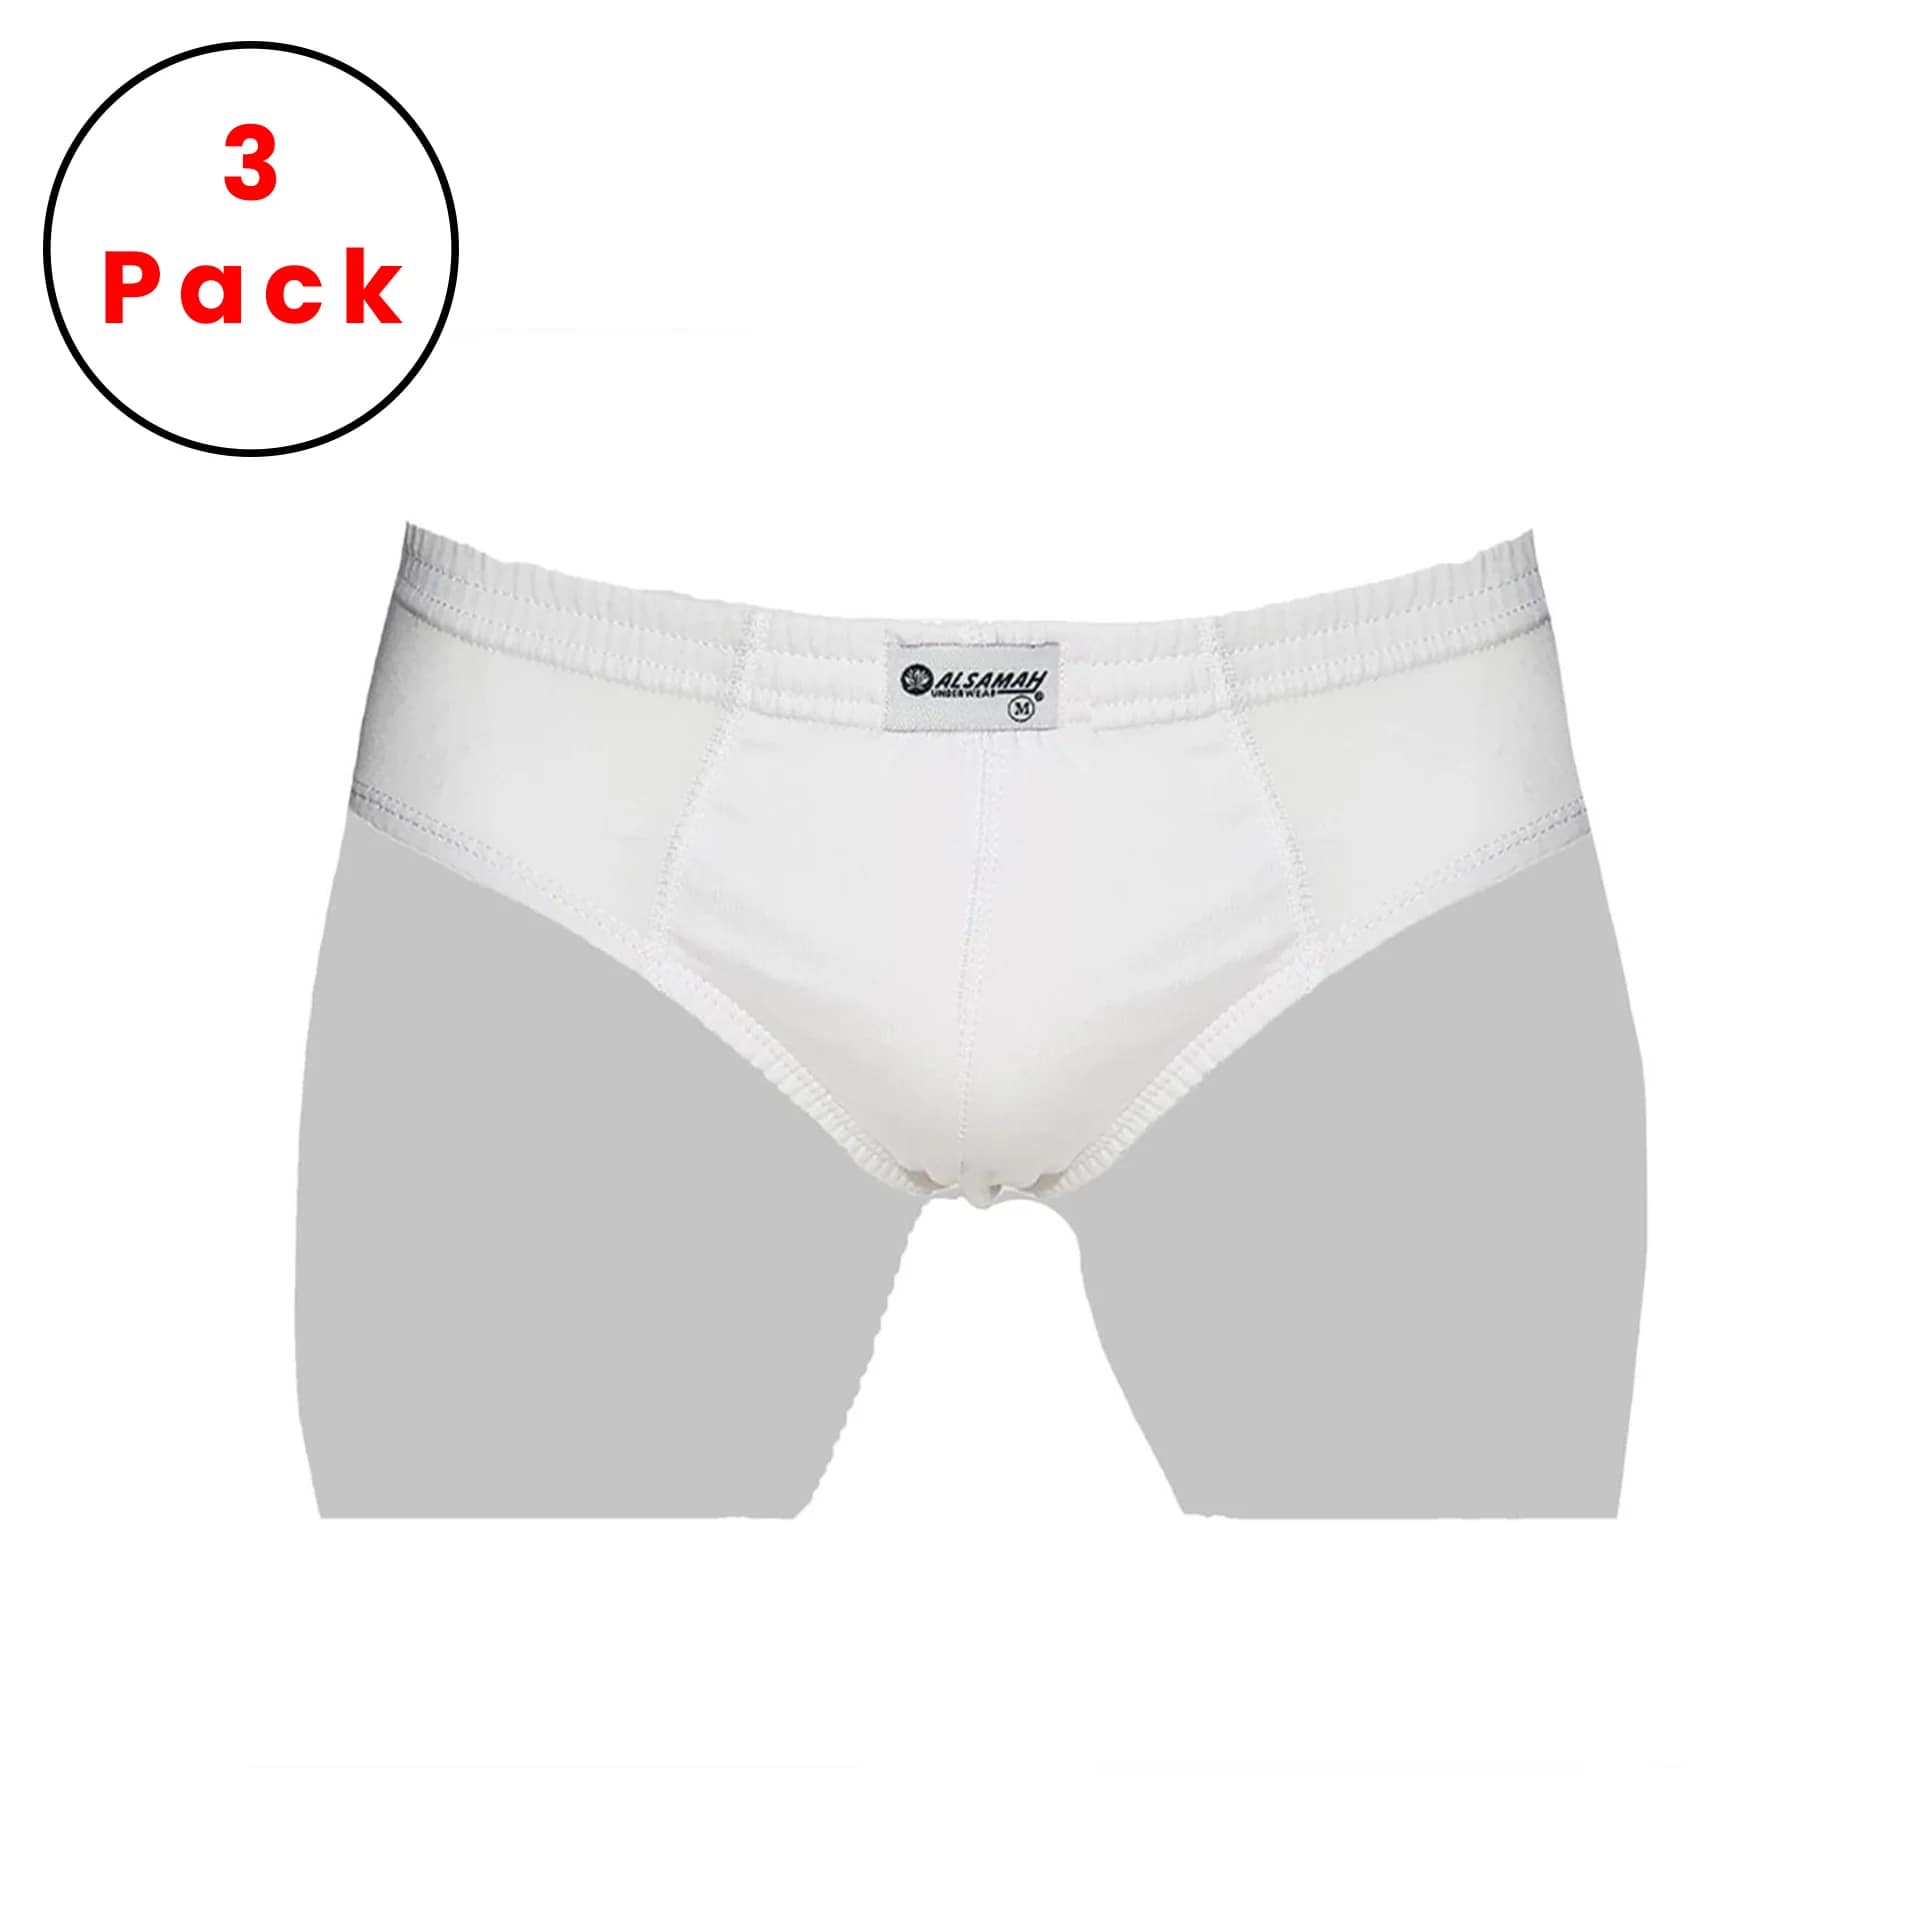 3-pack, 100% Cotton Men's Slip navy color from al samah